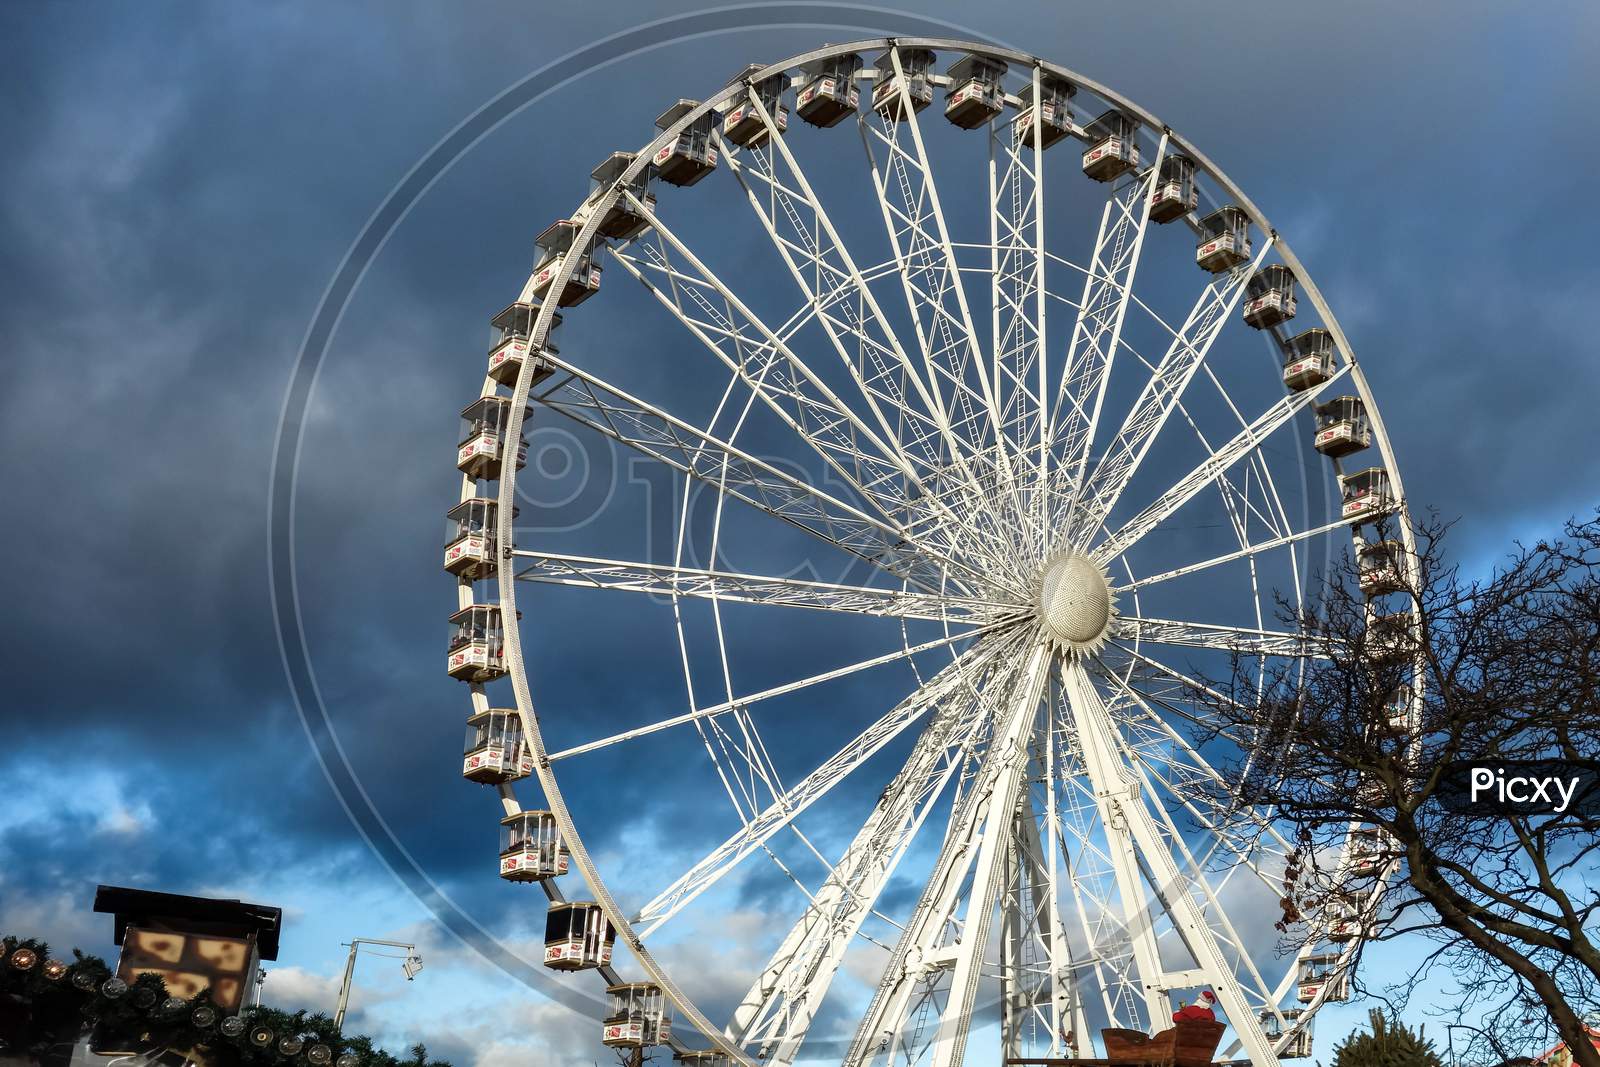 Ferris Wheel At Winter Wonderland Hyde Park